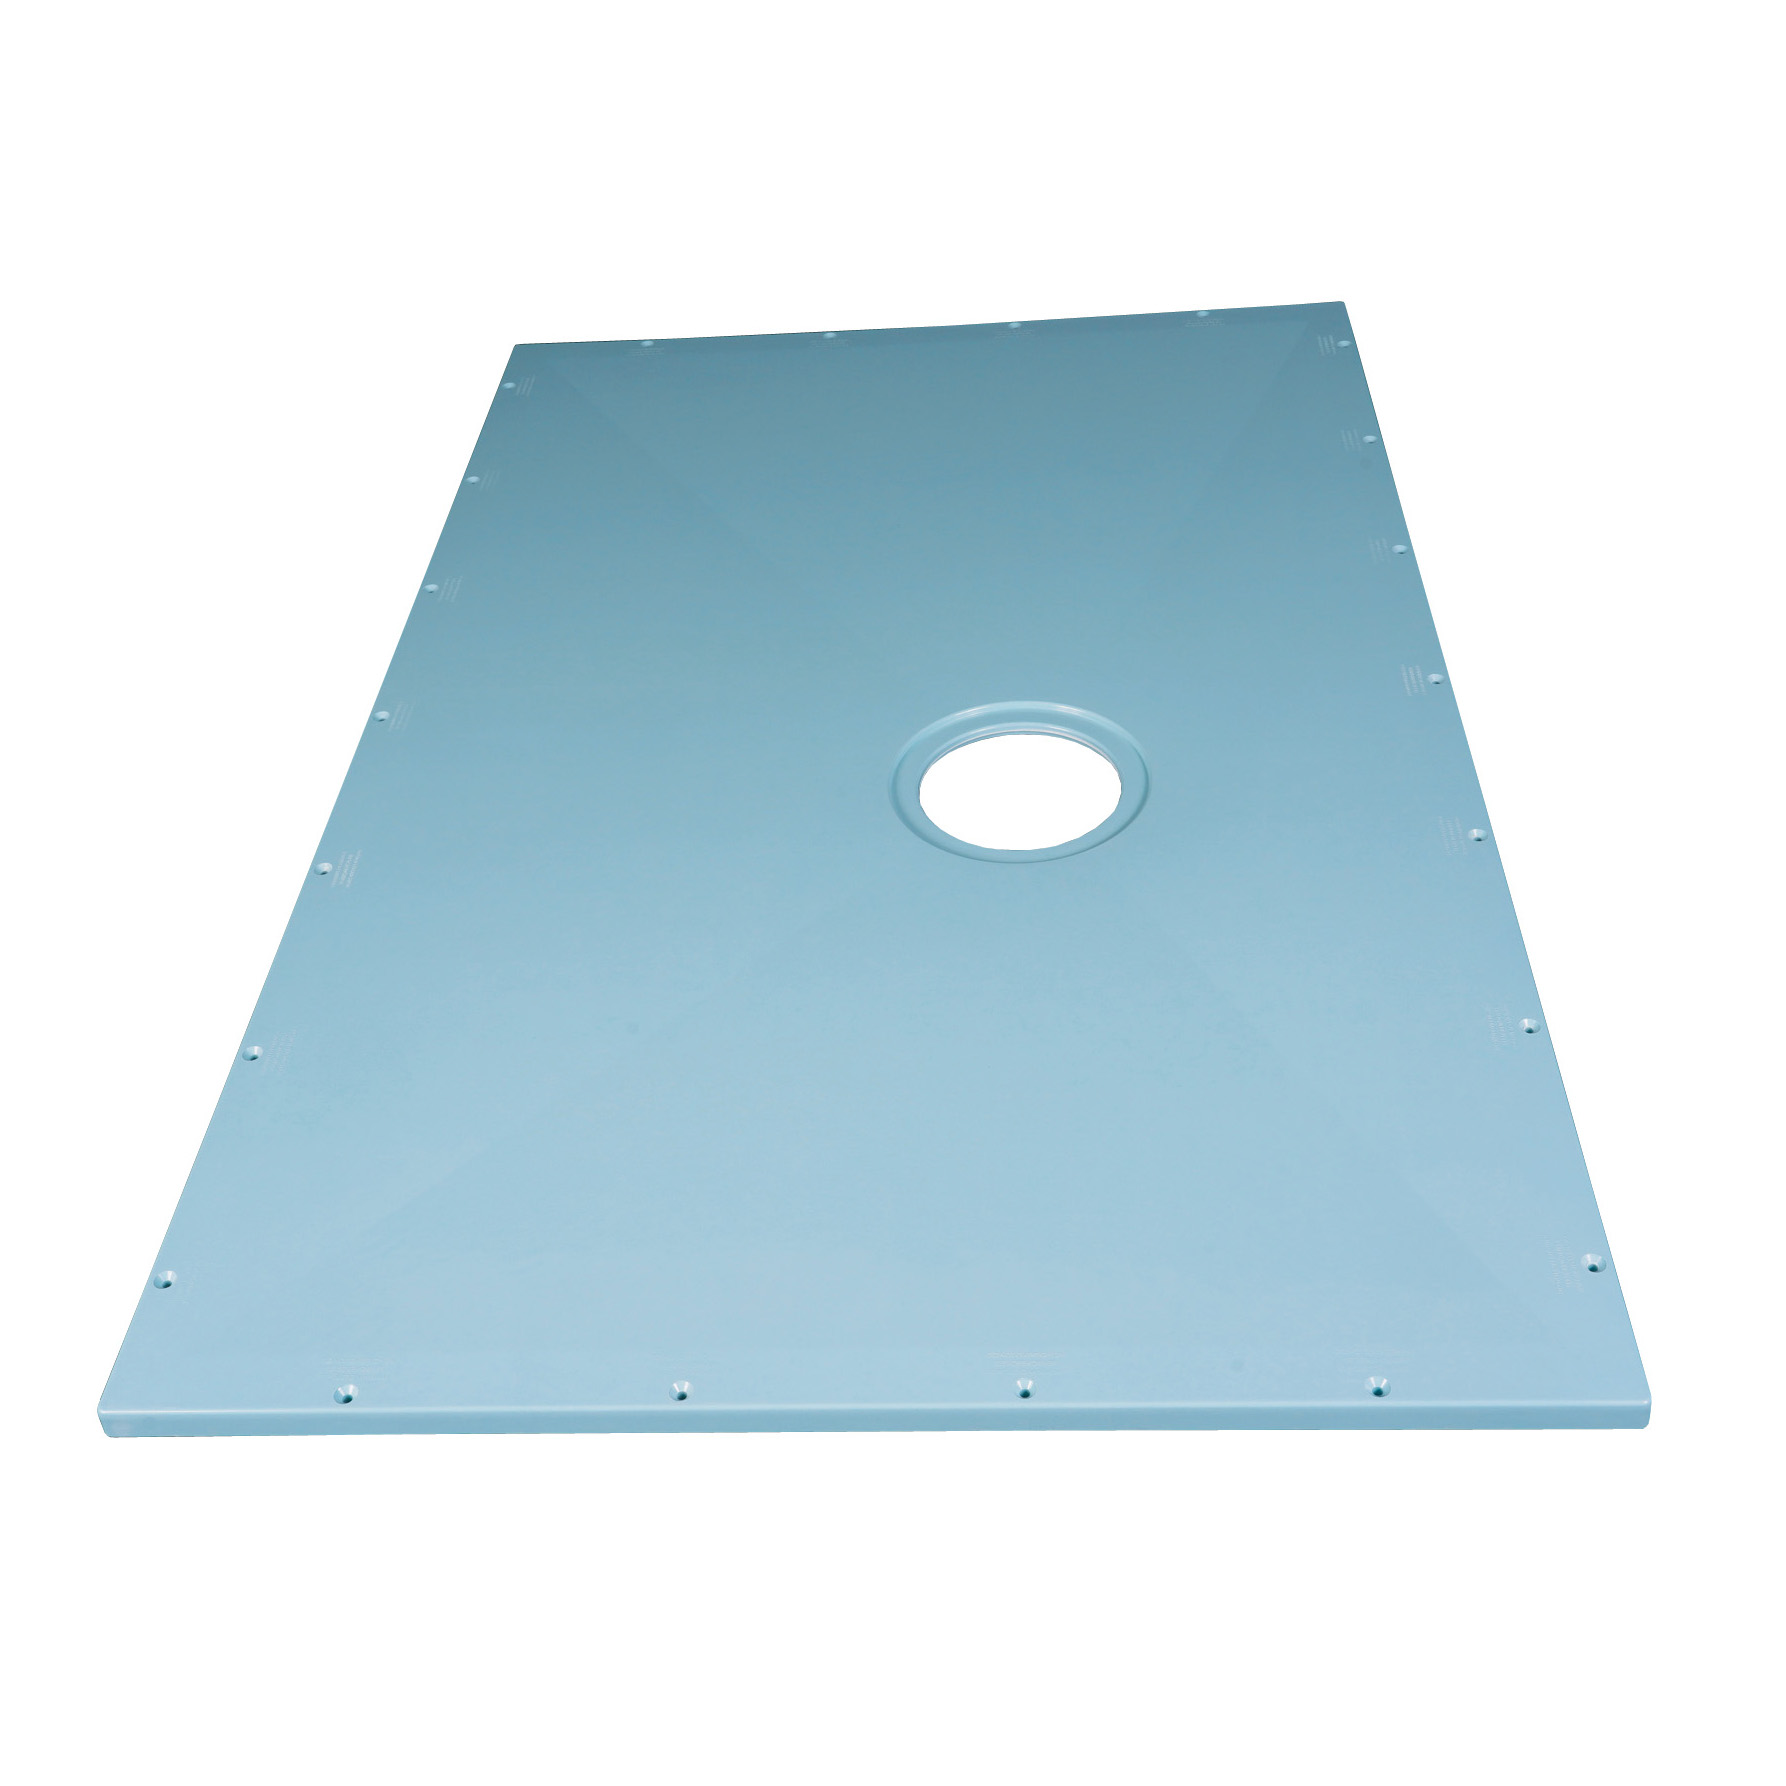 TrueDEK Classic 55-1/8x35-1/2x7/8" Shower Base in Blue